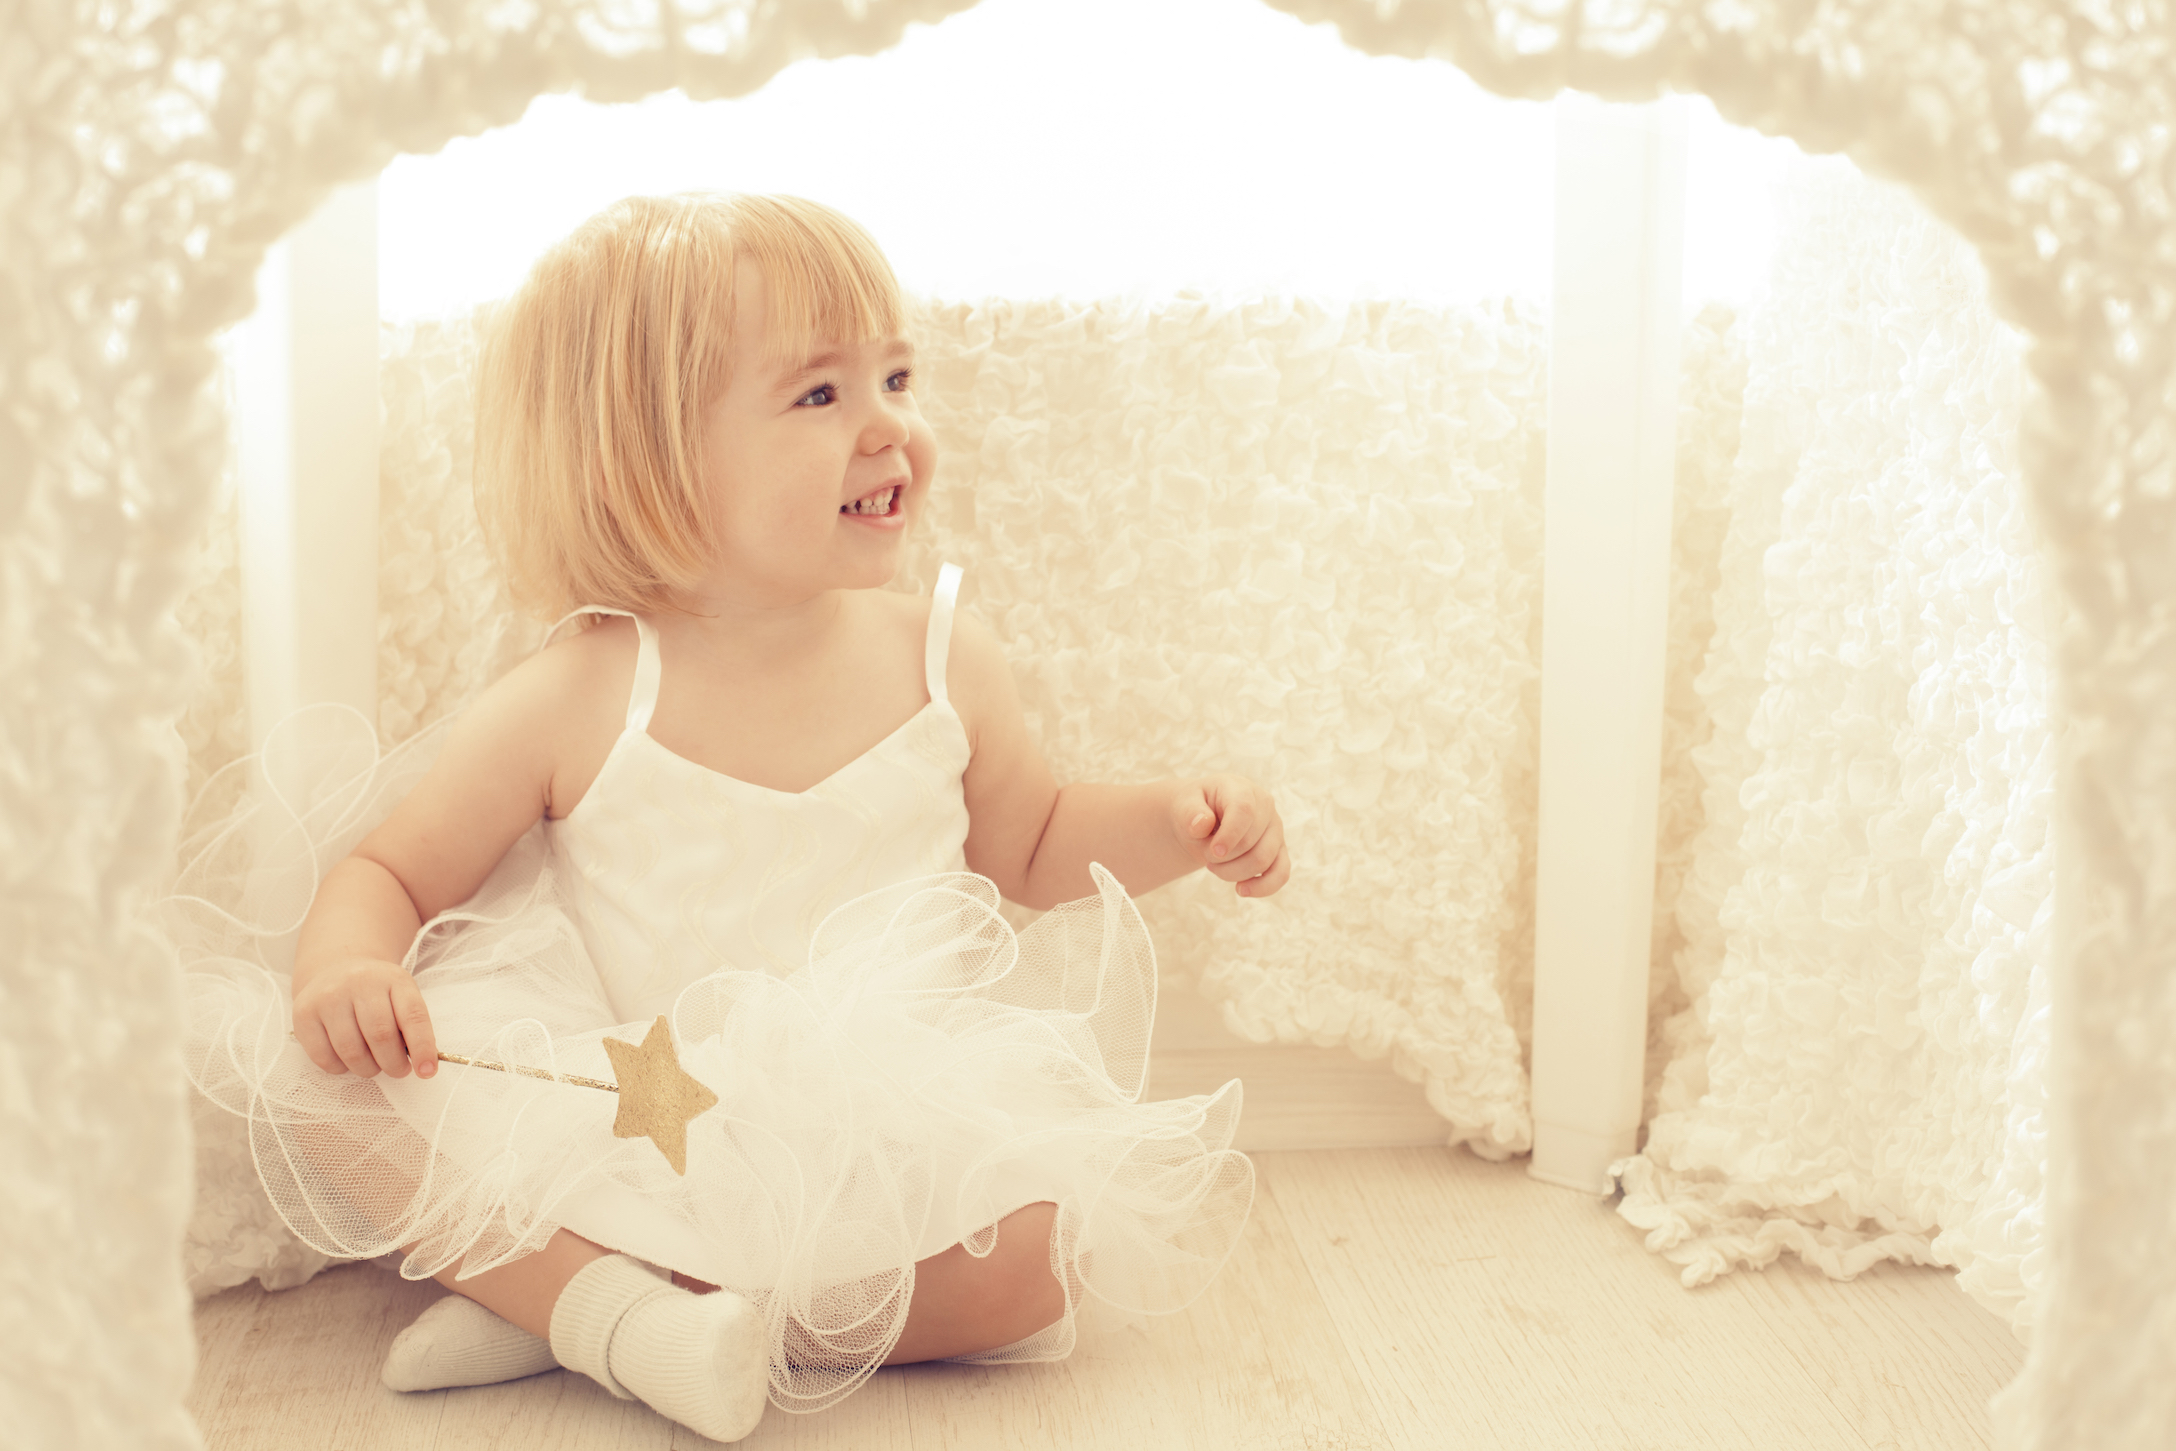 126,516 Cute Little Fairy Images, Stock Photos & Vectors | Shutterstock